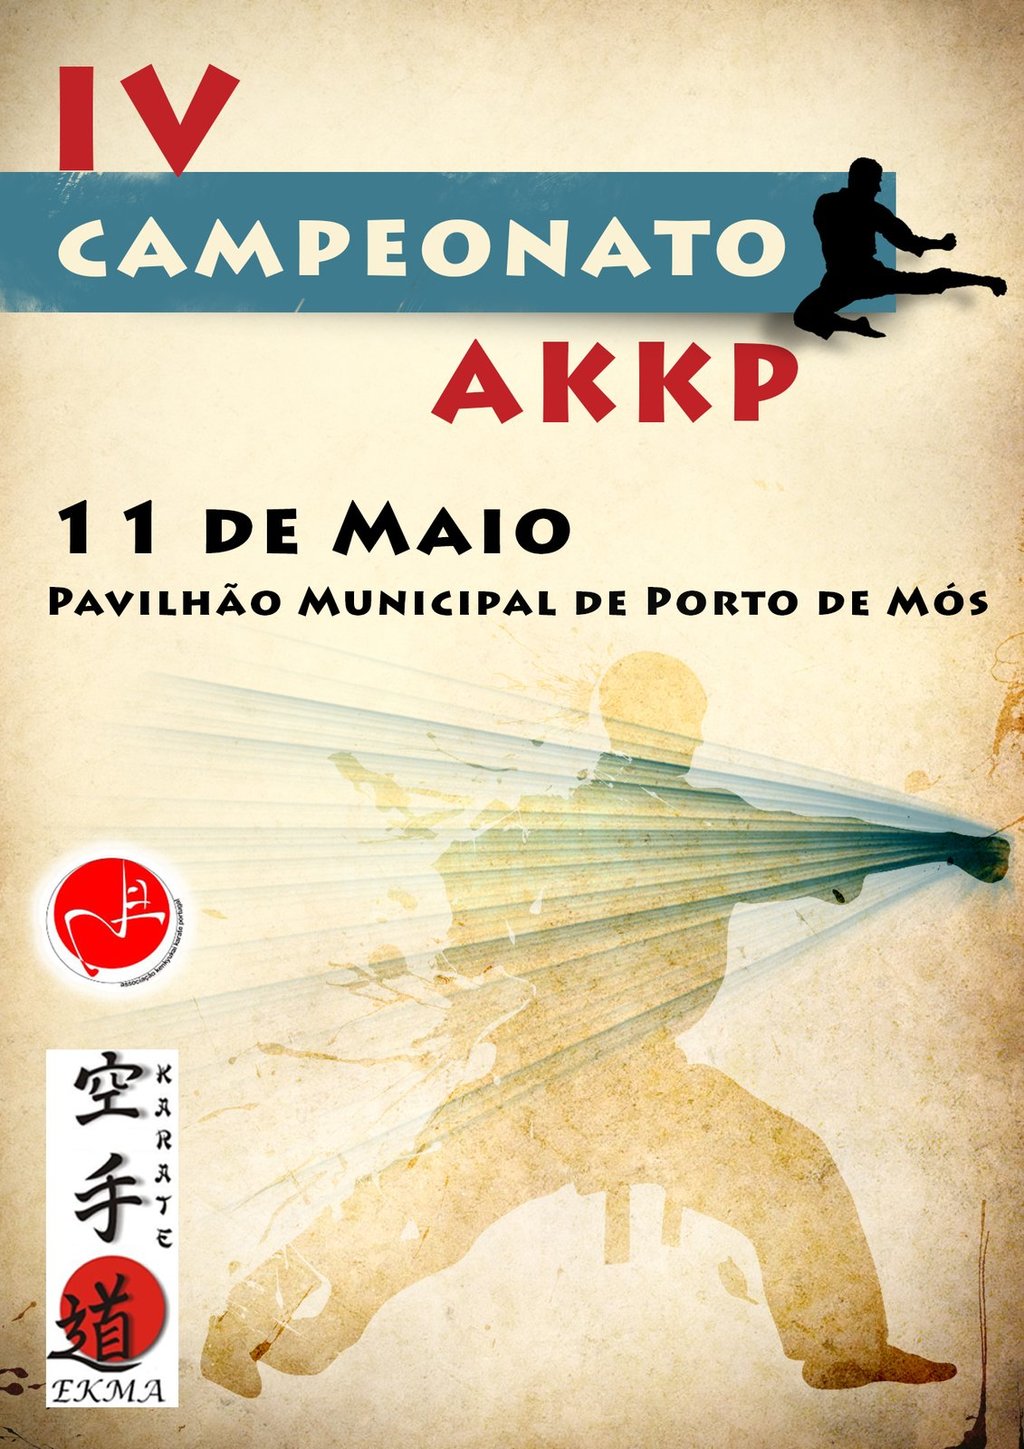 4º Campeonato AKKP